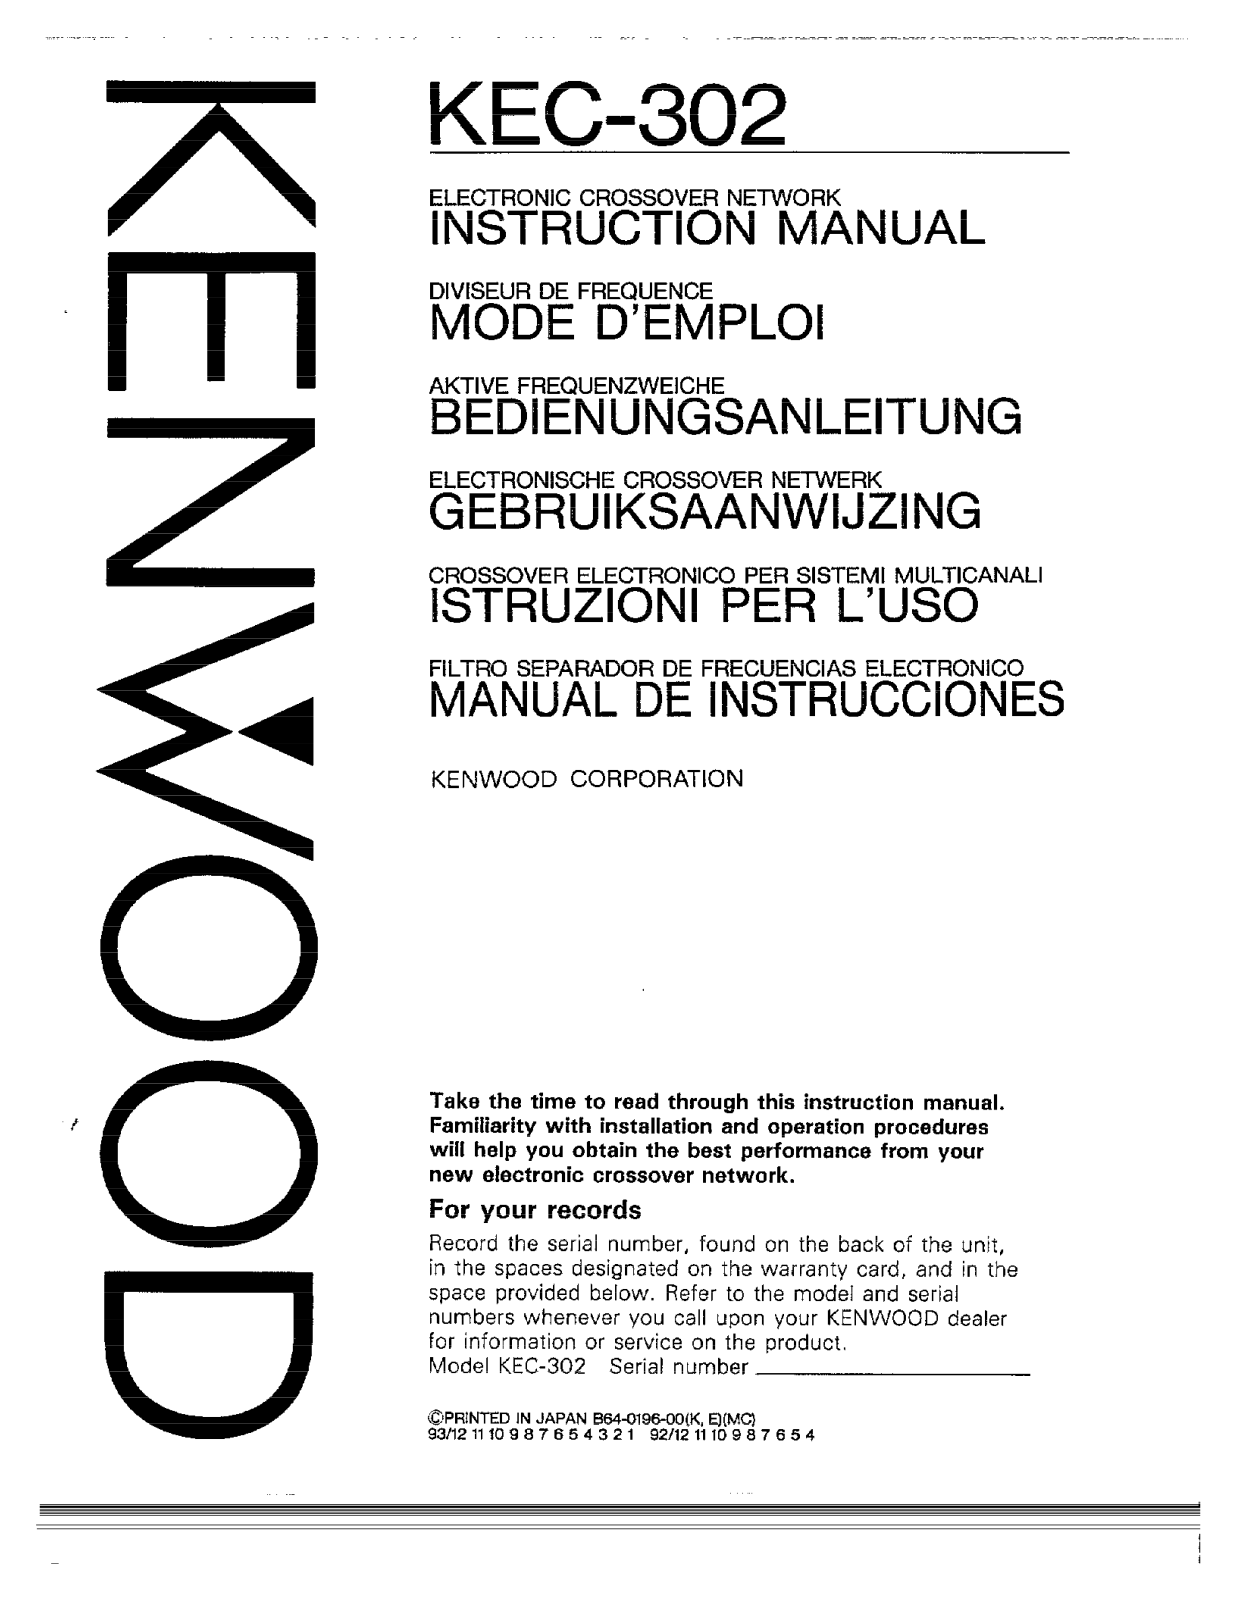 Kenwood KEC-302 Owner's Manual